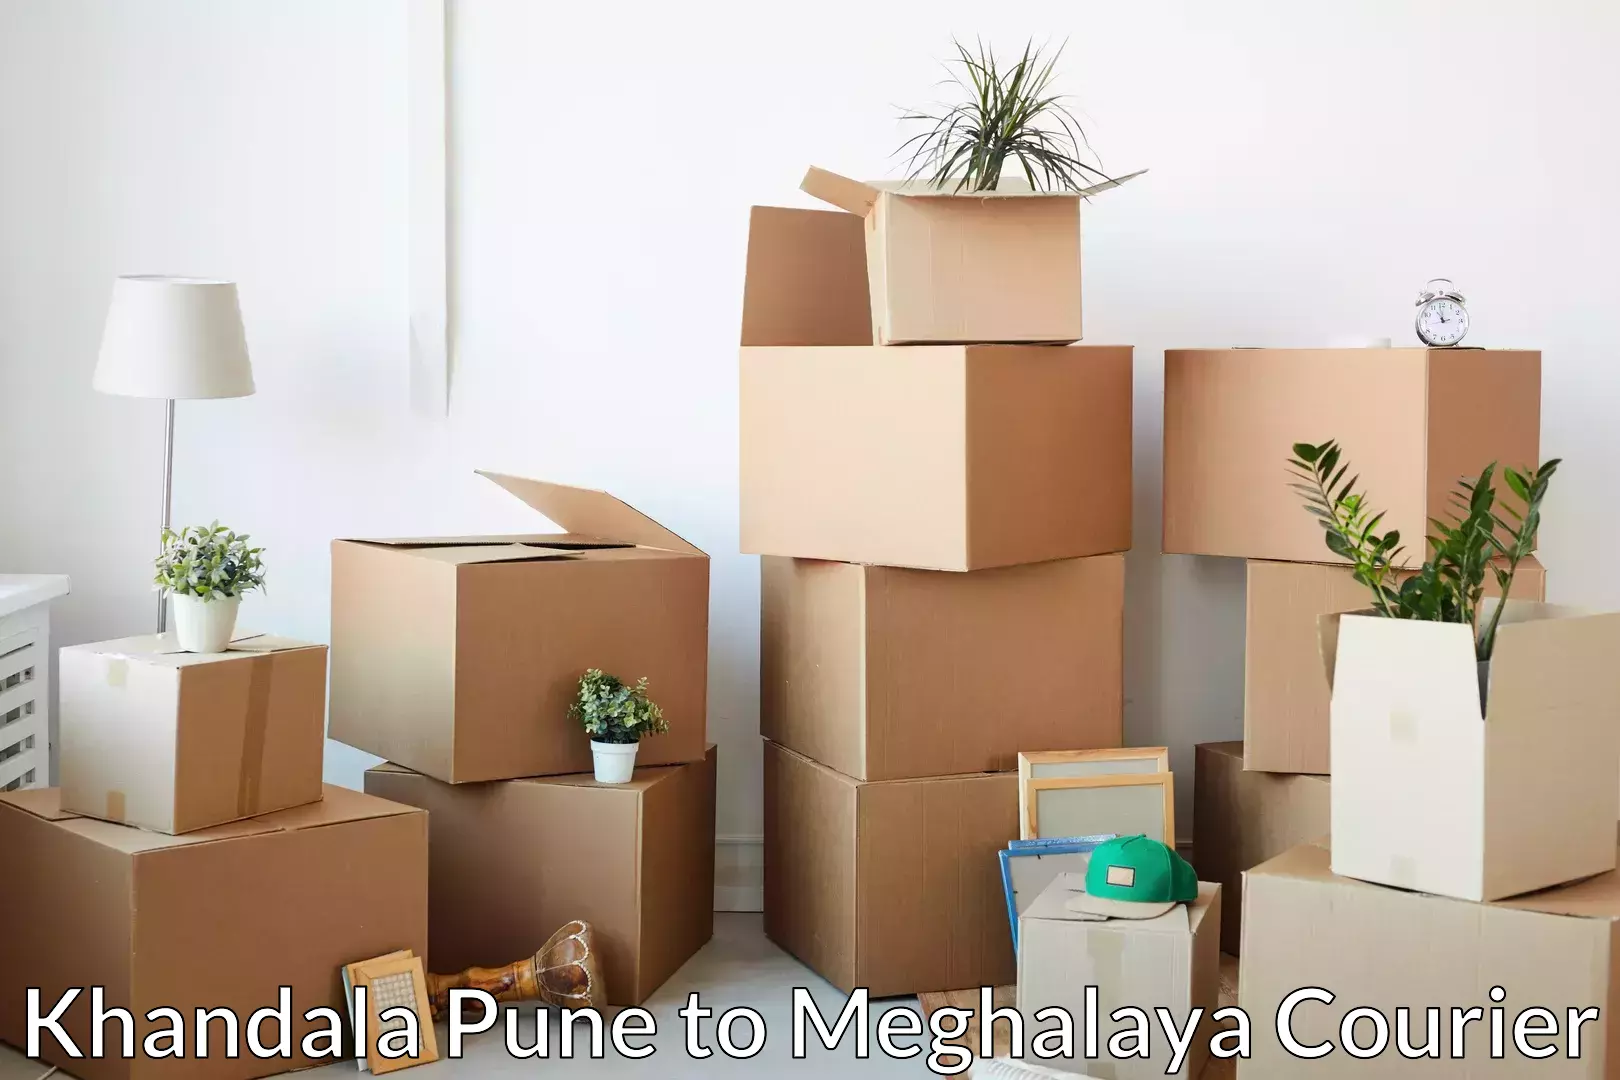 Quality moving company Khandala Pune to Meghalaya